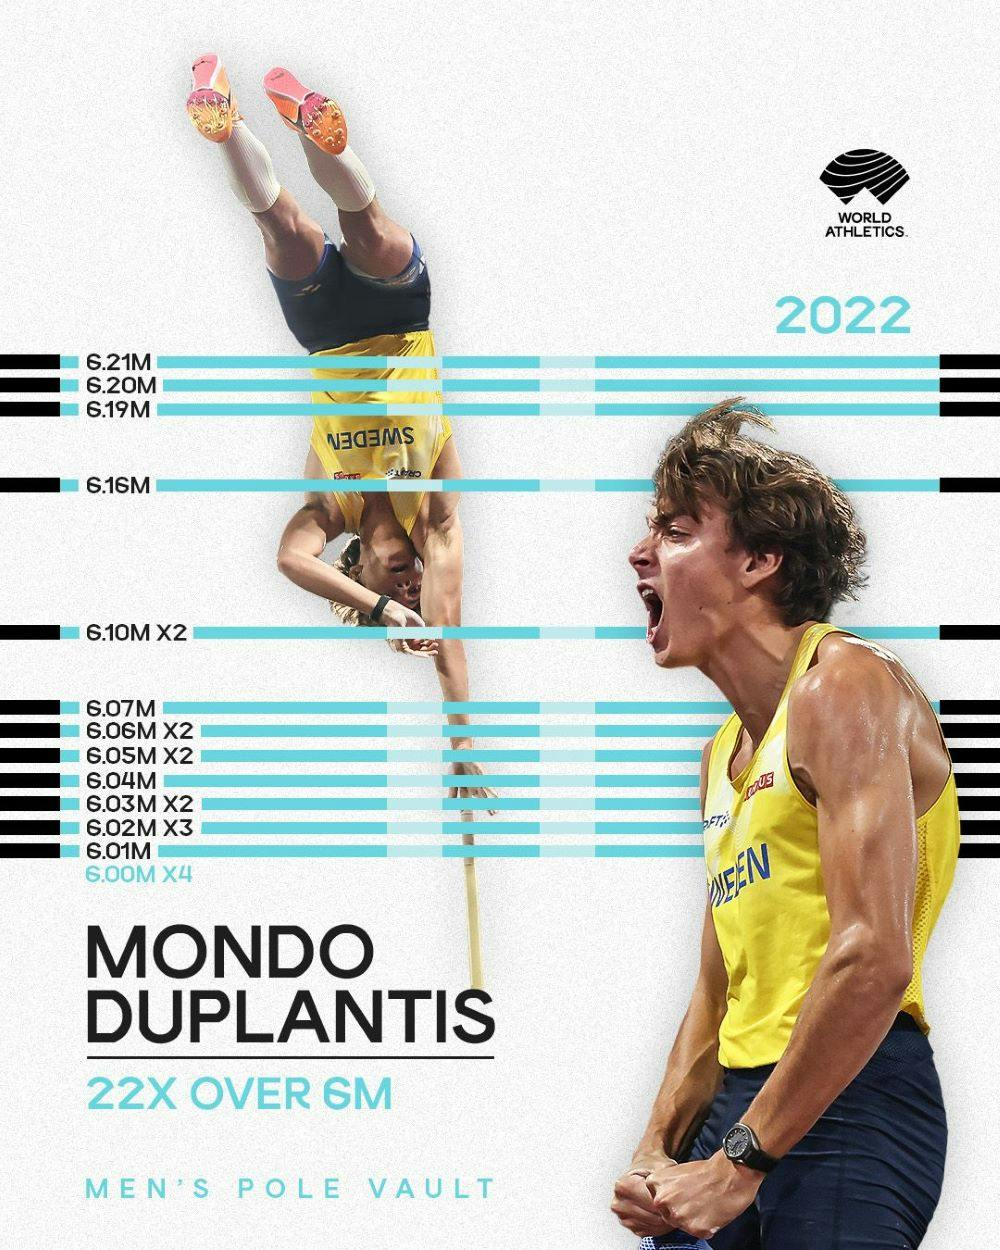 Mondo Duplantis: Κατέρριψε τρεις φορές το παγκόσμιο ρεκόρ και ξεπέρασε 22 φορές τα 6μ. runbeat.gr 